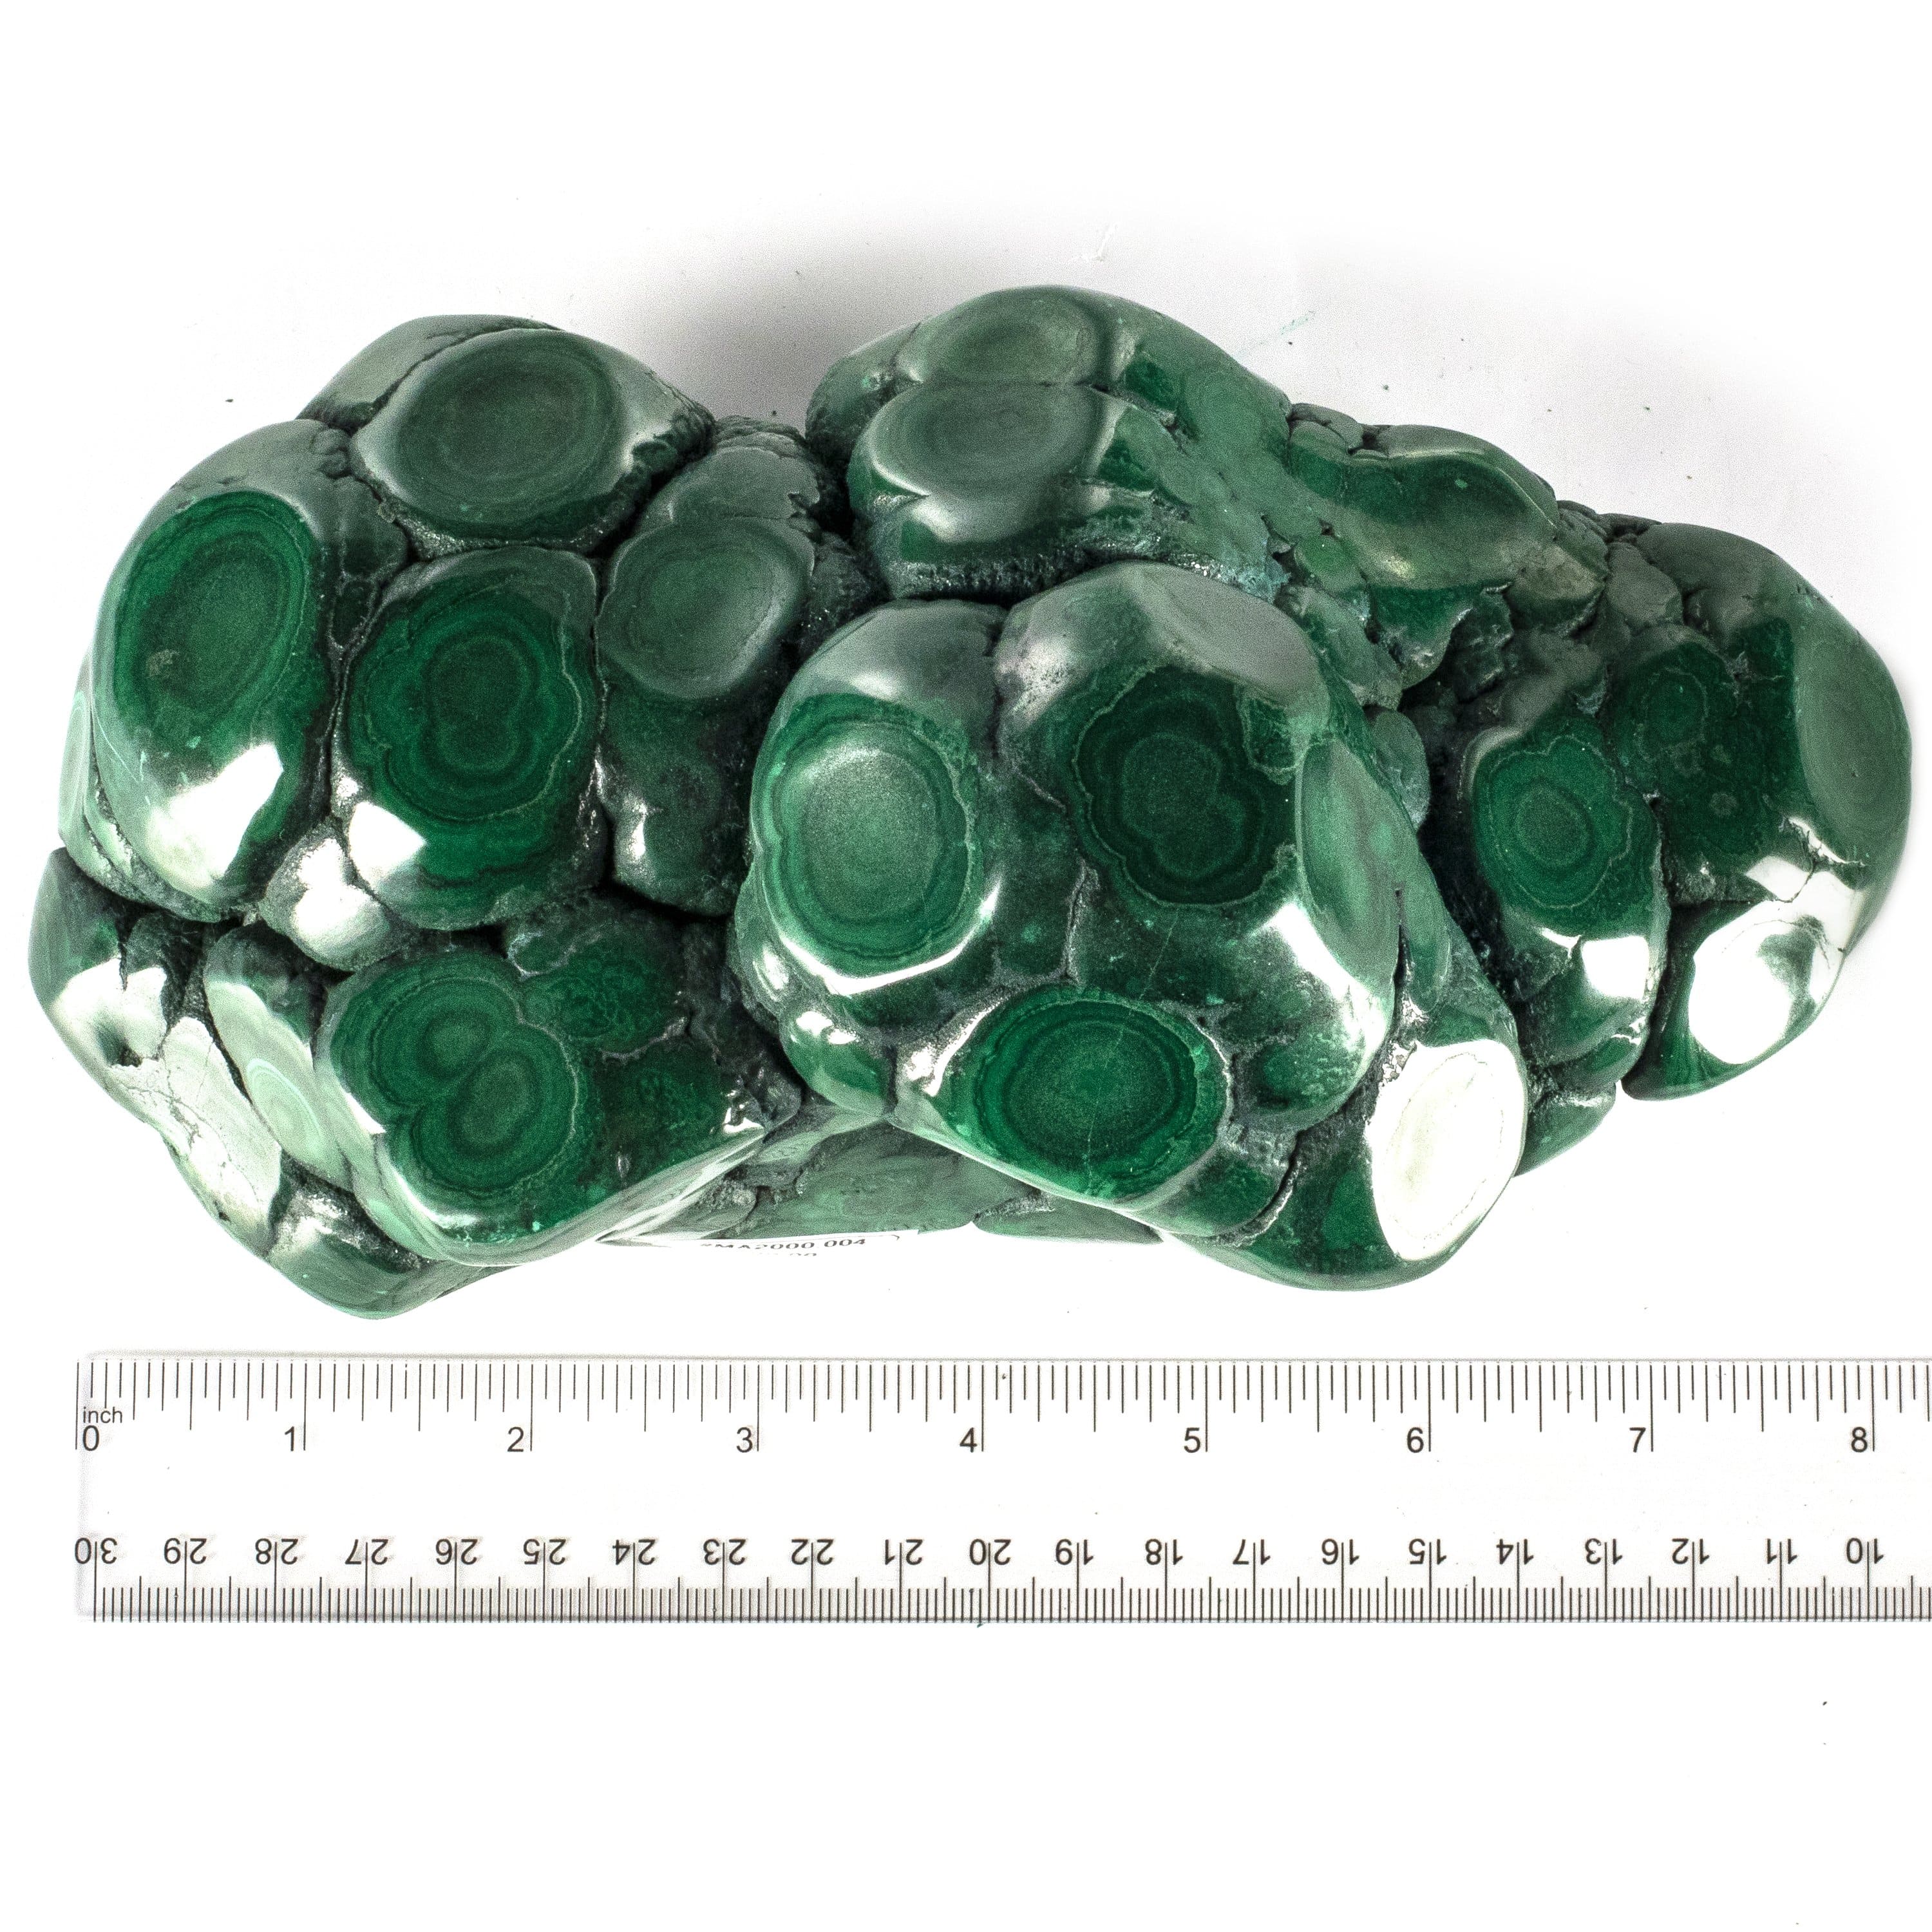 Kalifano Malachite Rare Natural Green Malachite Polished Freeform Specimen from Congo - 3.1 kg / 6.8 lbs MA2000.004